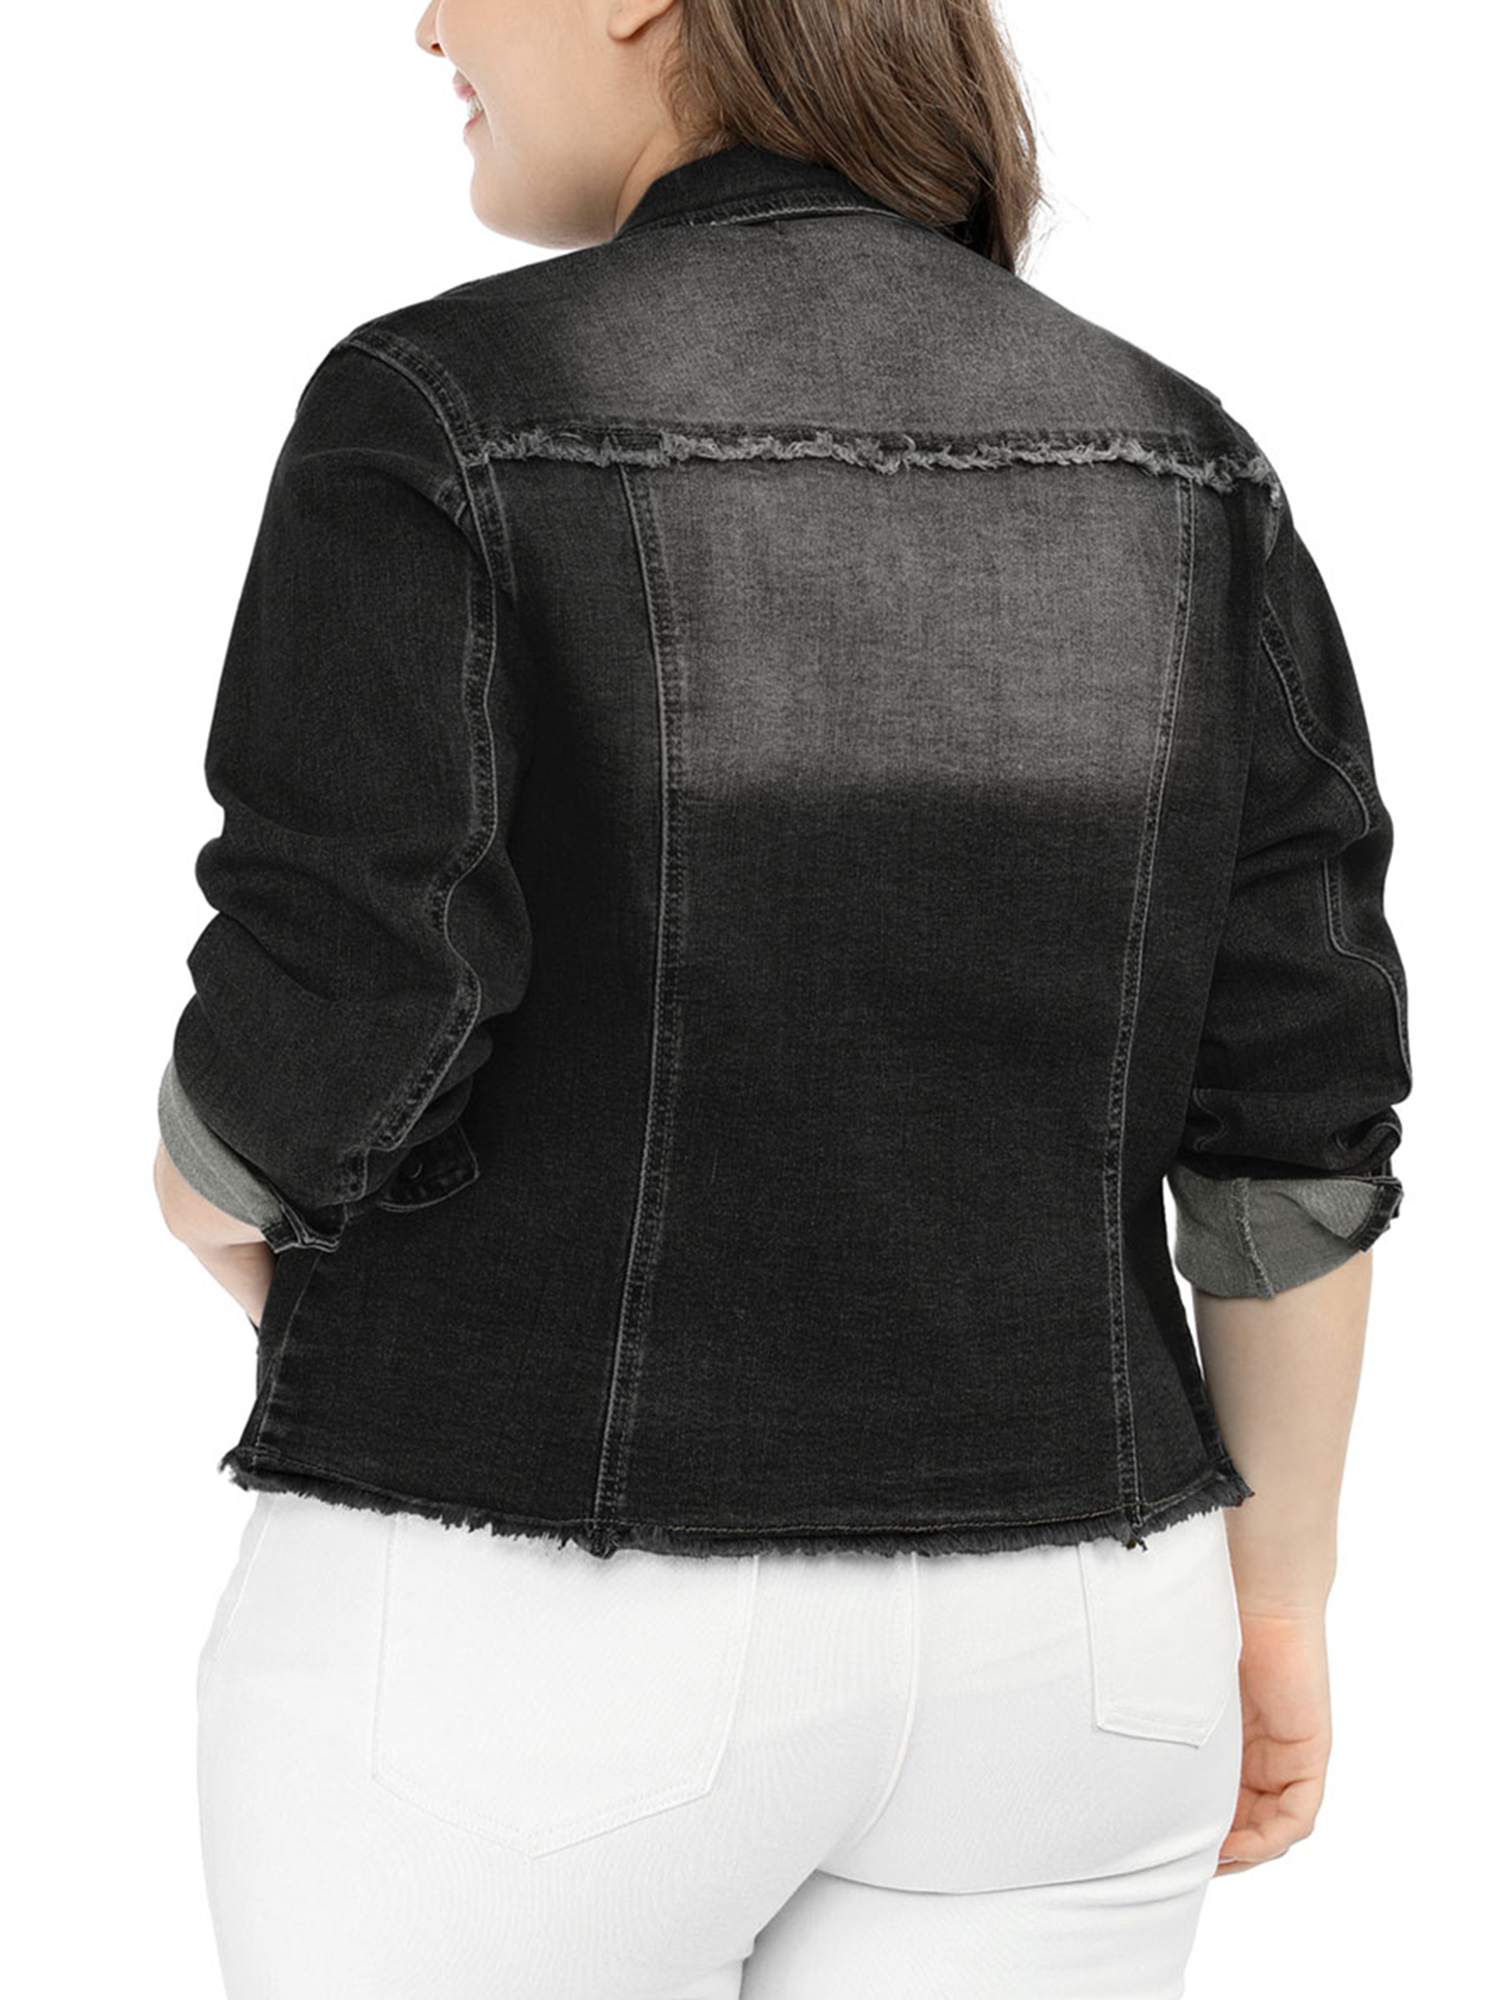 Unique Bargains Women's Plus Size Washed Front Frayed Classic Denim Jacket - image 4 of 8